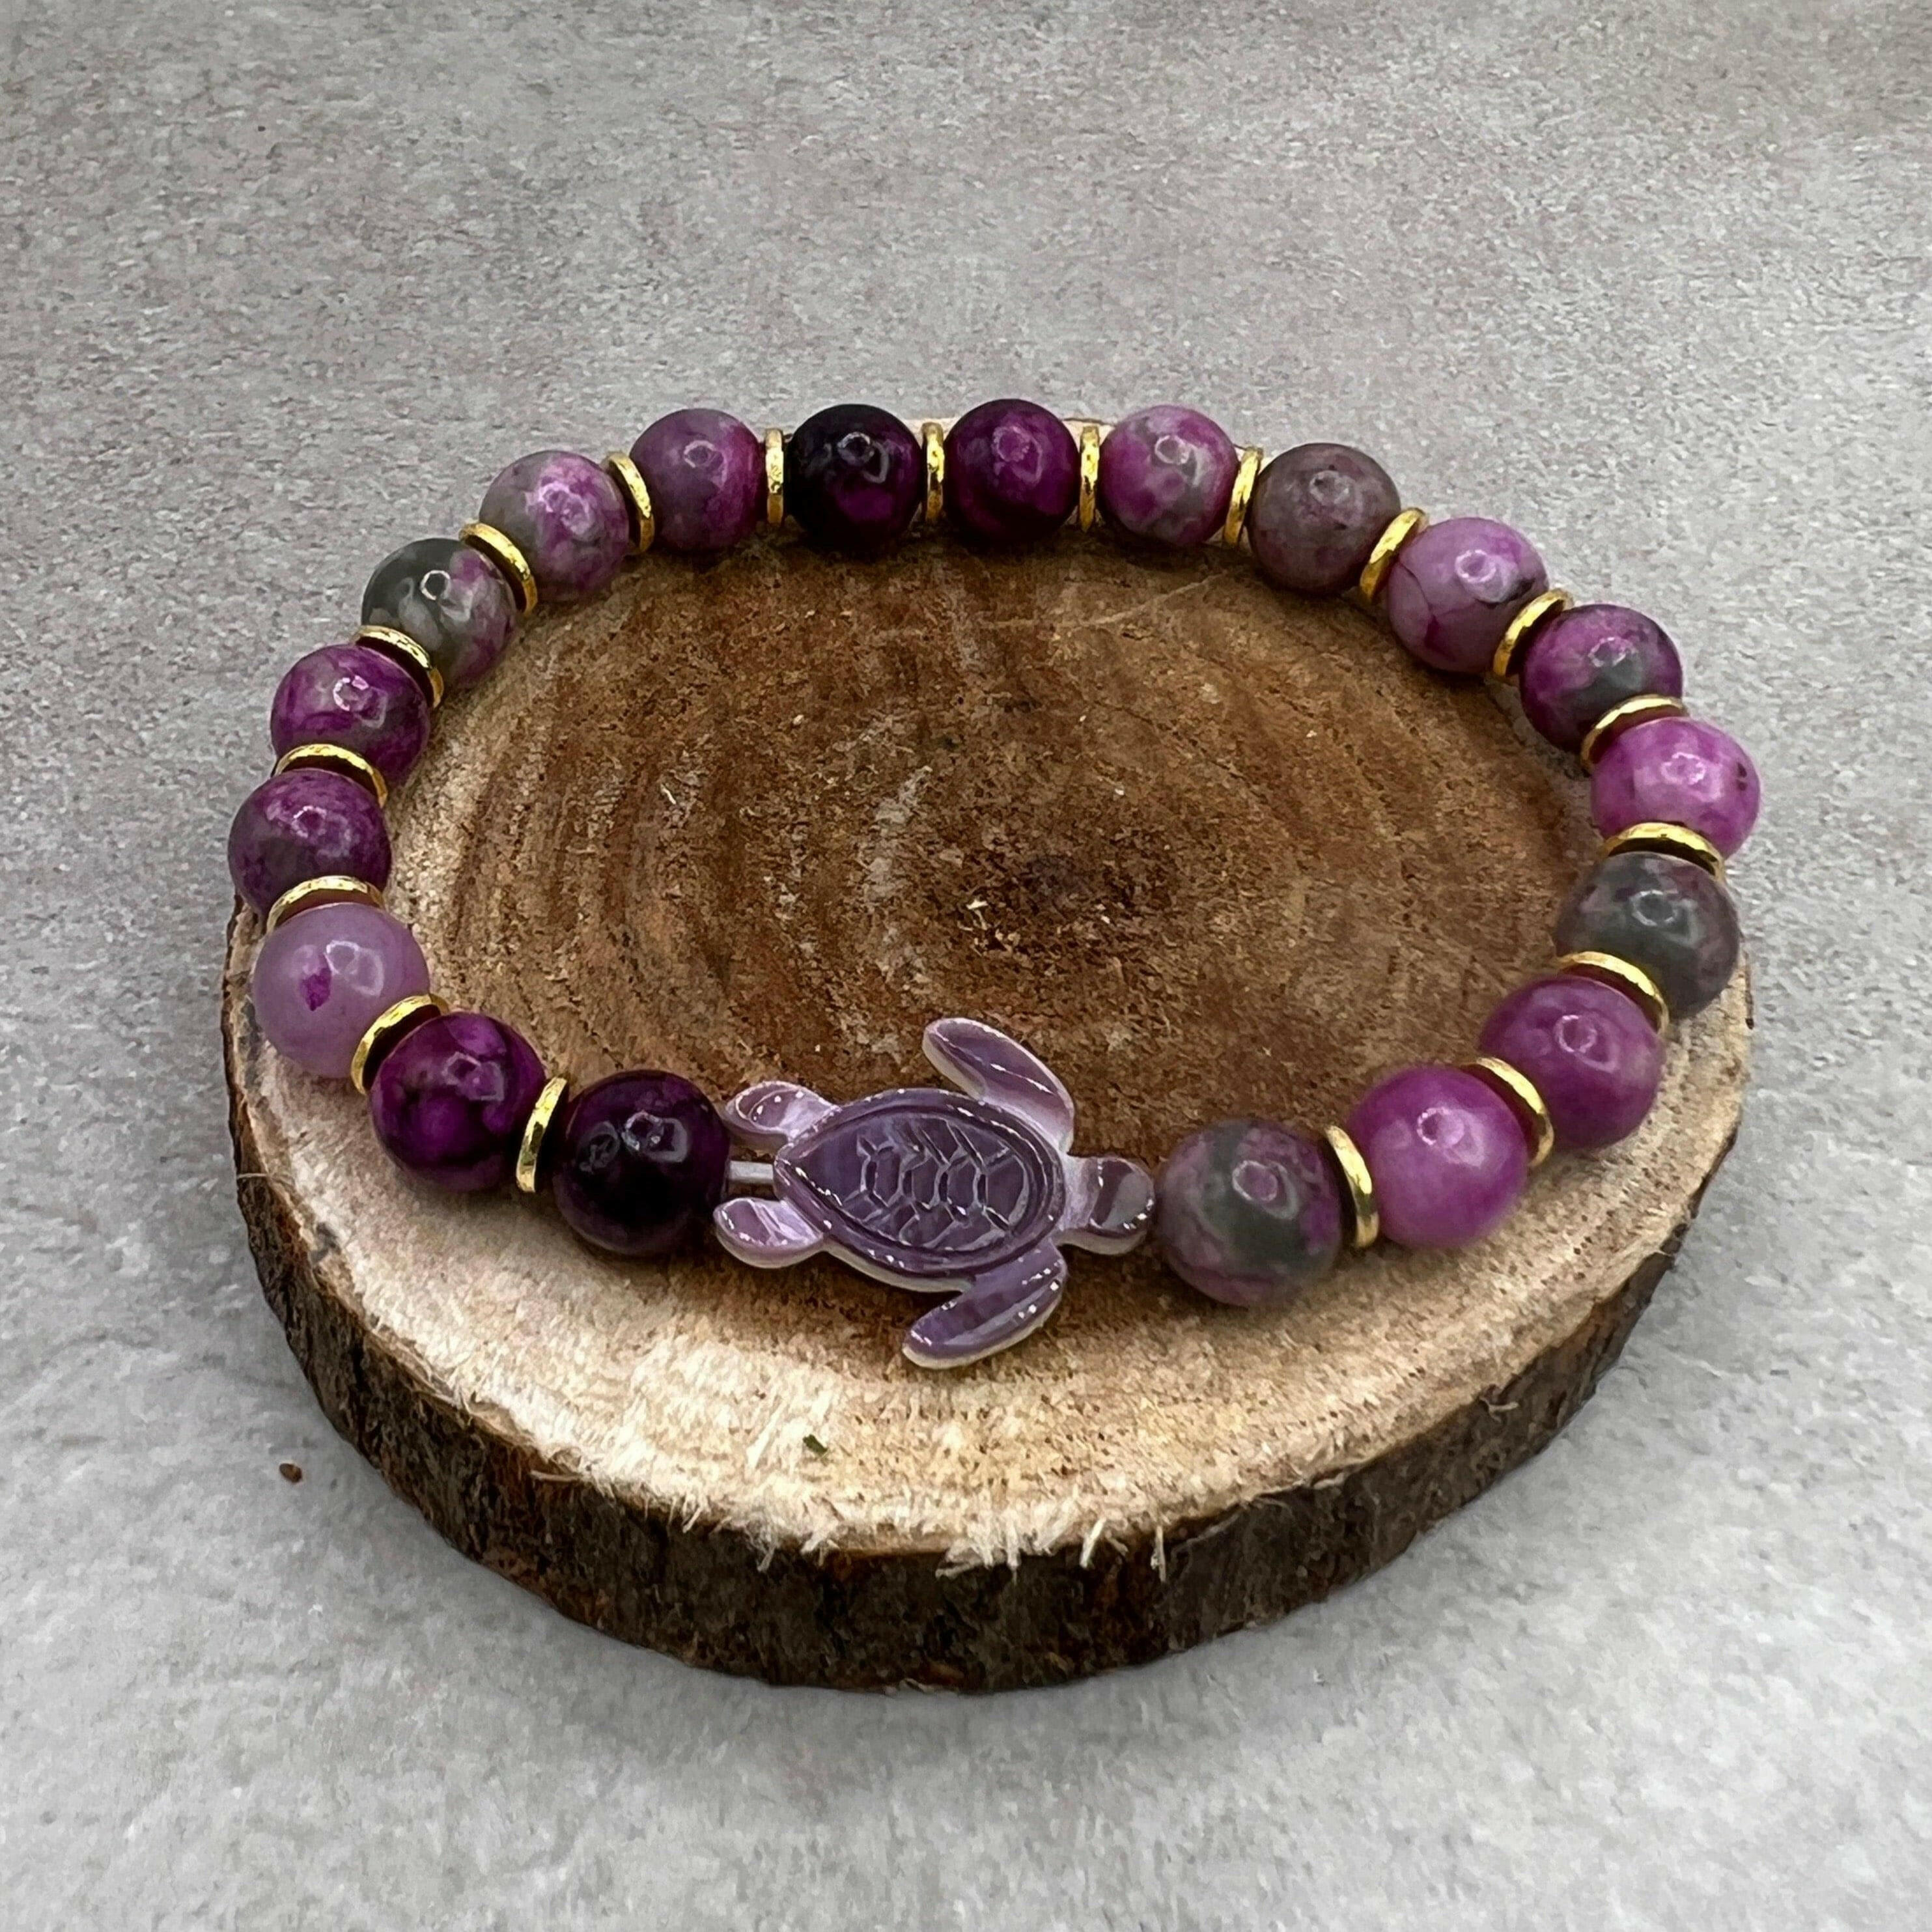 Bec Sue Jewelry Shop sugilite bracelet 6.5 / purple / sugilite and gold spacer beads Sugilite Jewelry, Turtle Sugilite 8mm Stone Tags 554